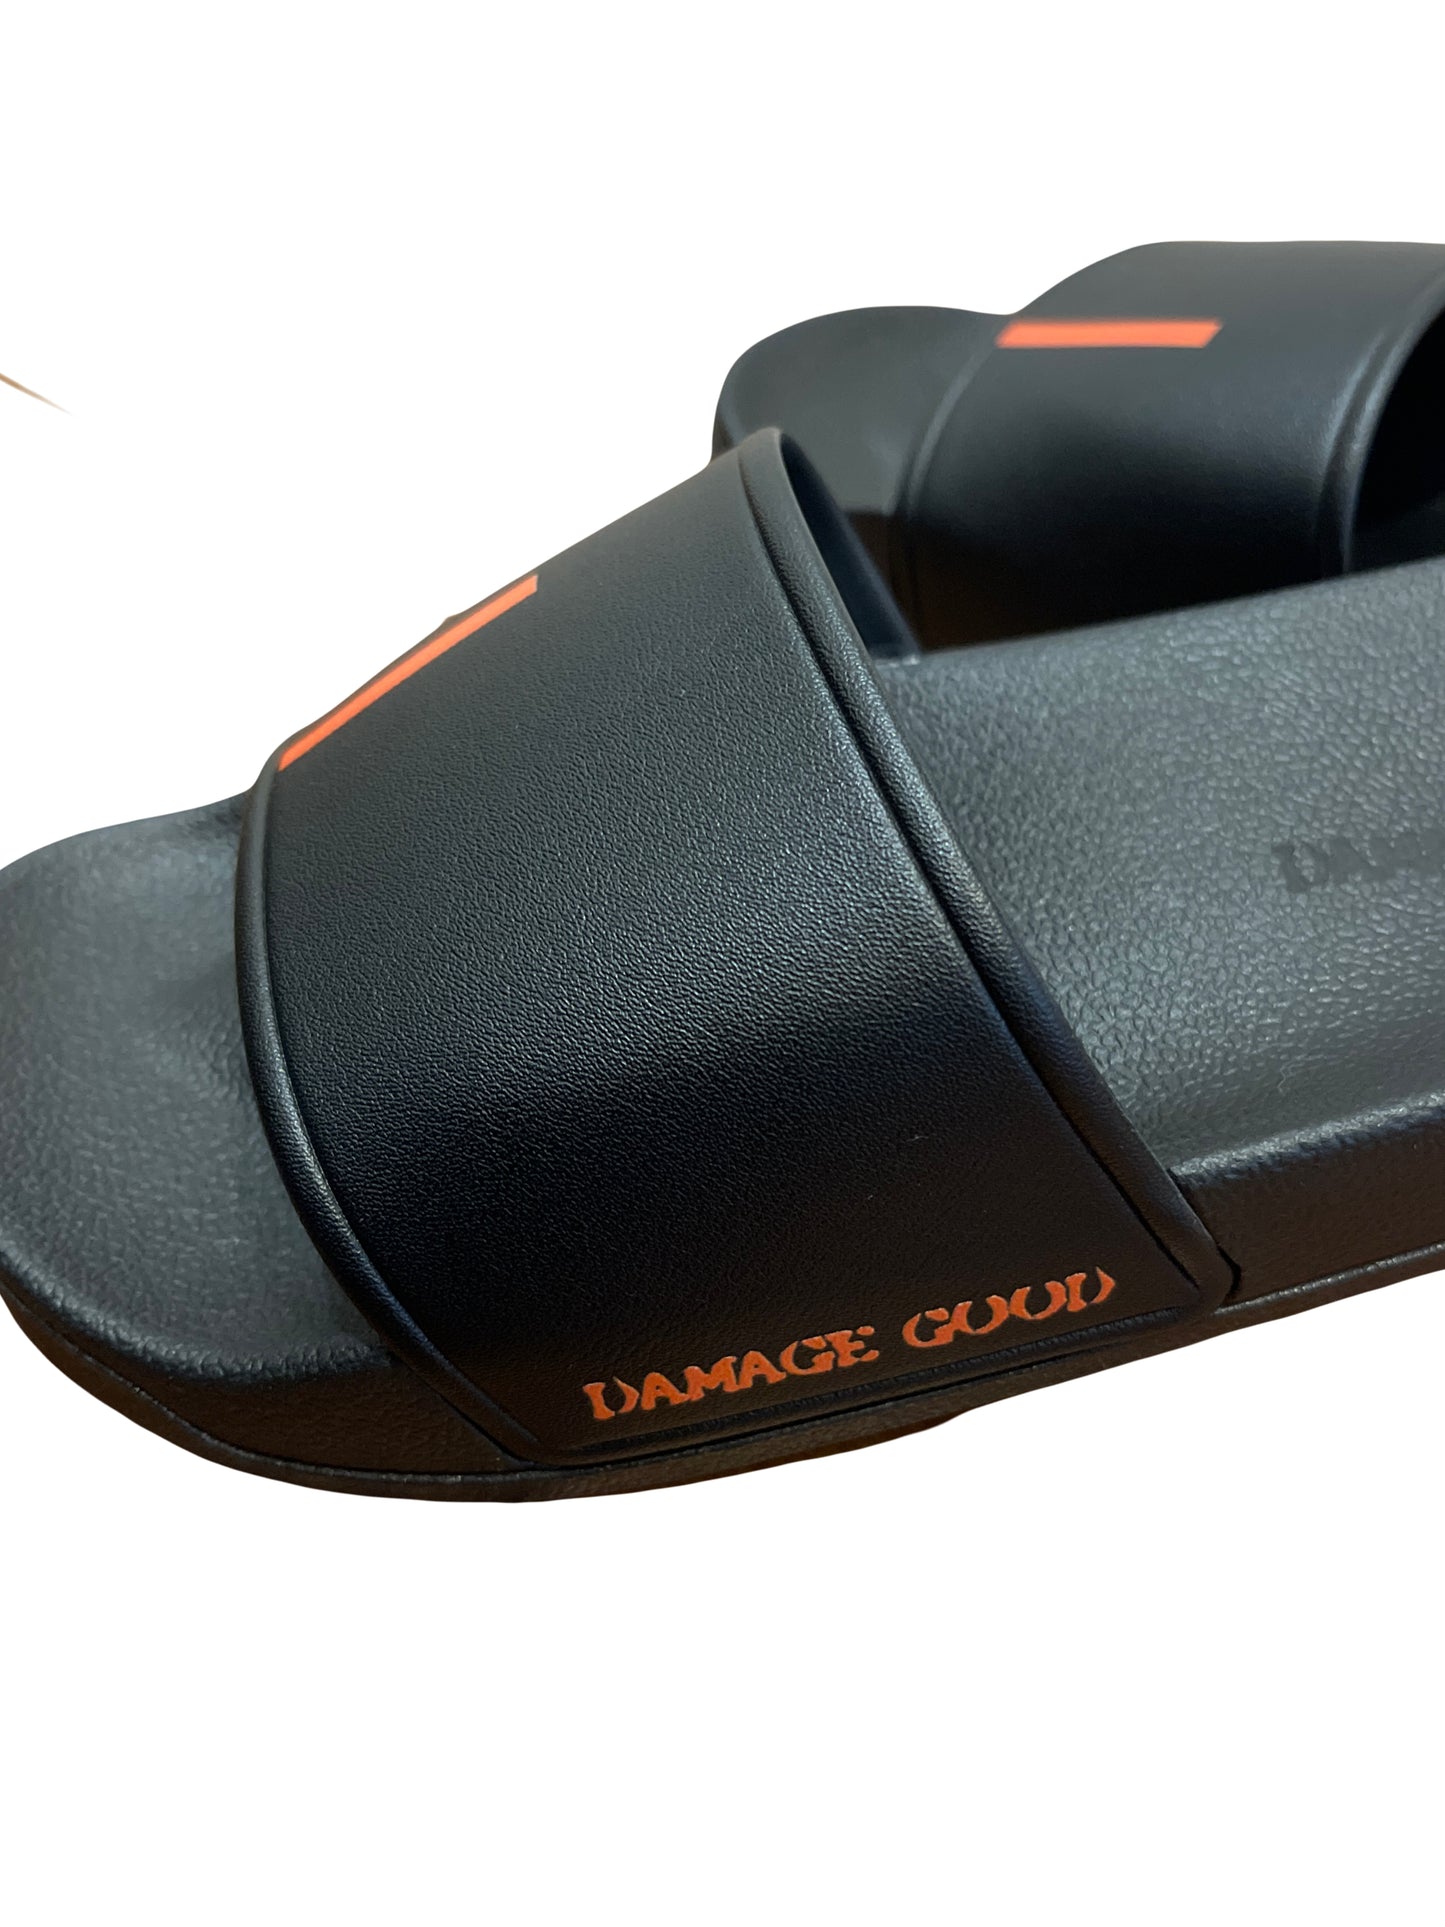 DAMAGE_GOOD Sandals